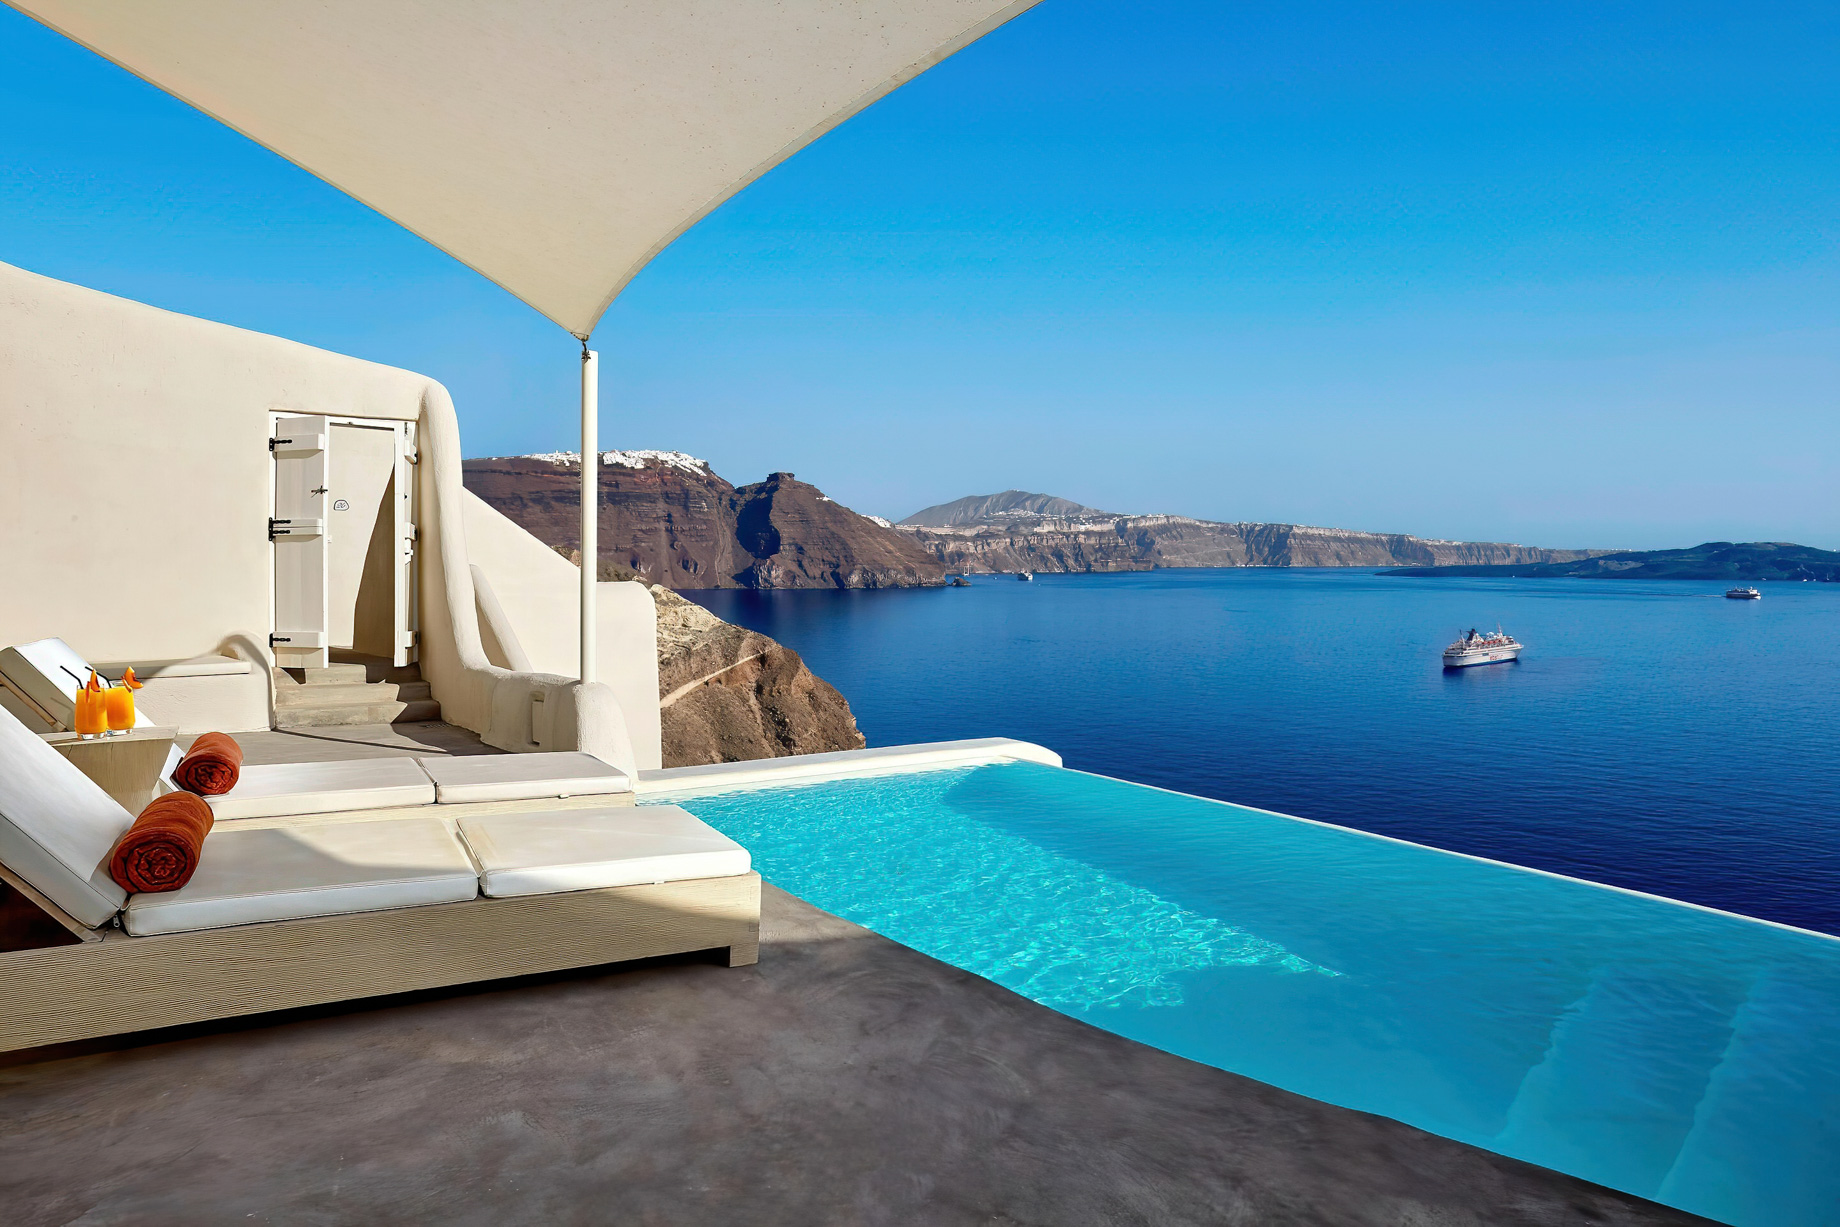 Mystique Hotel Santorini – Oia, Santorini Island, Greece – Secrecy Villa Private Pool Deck